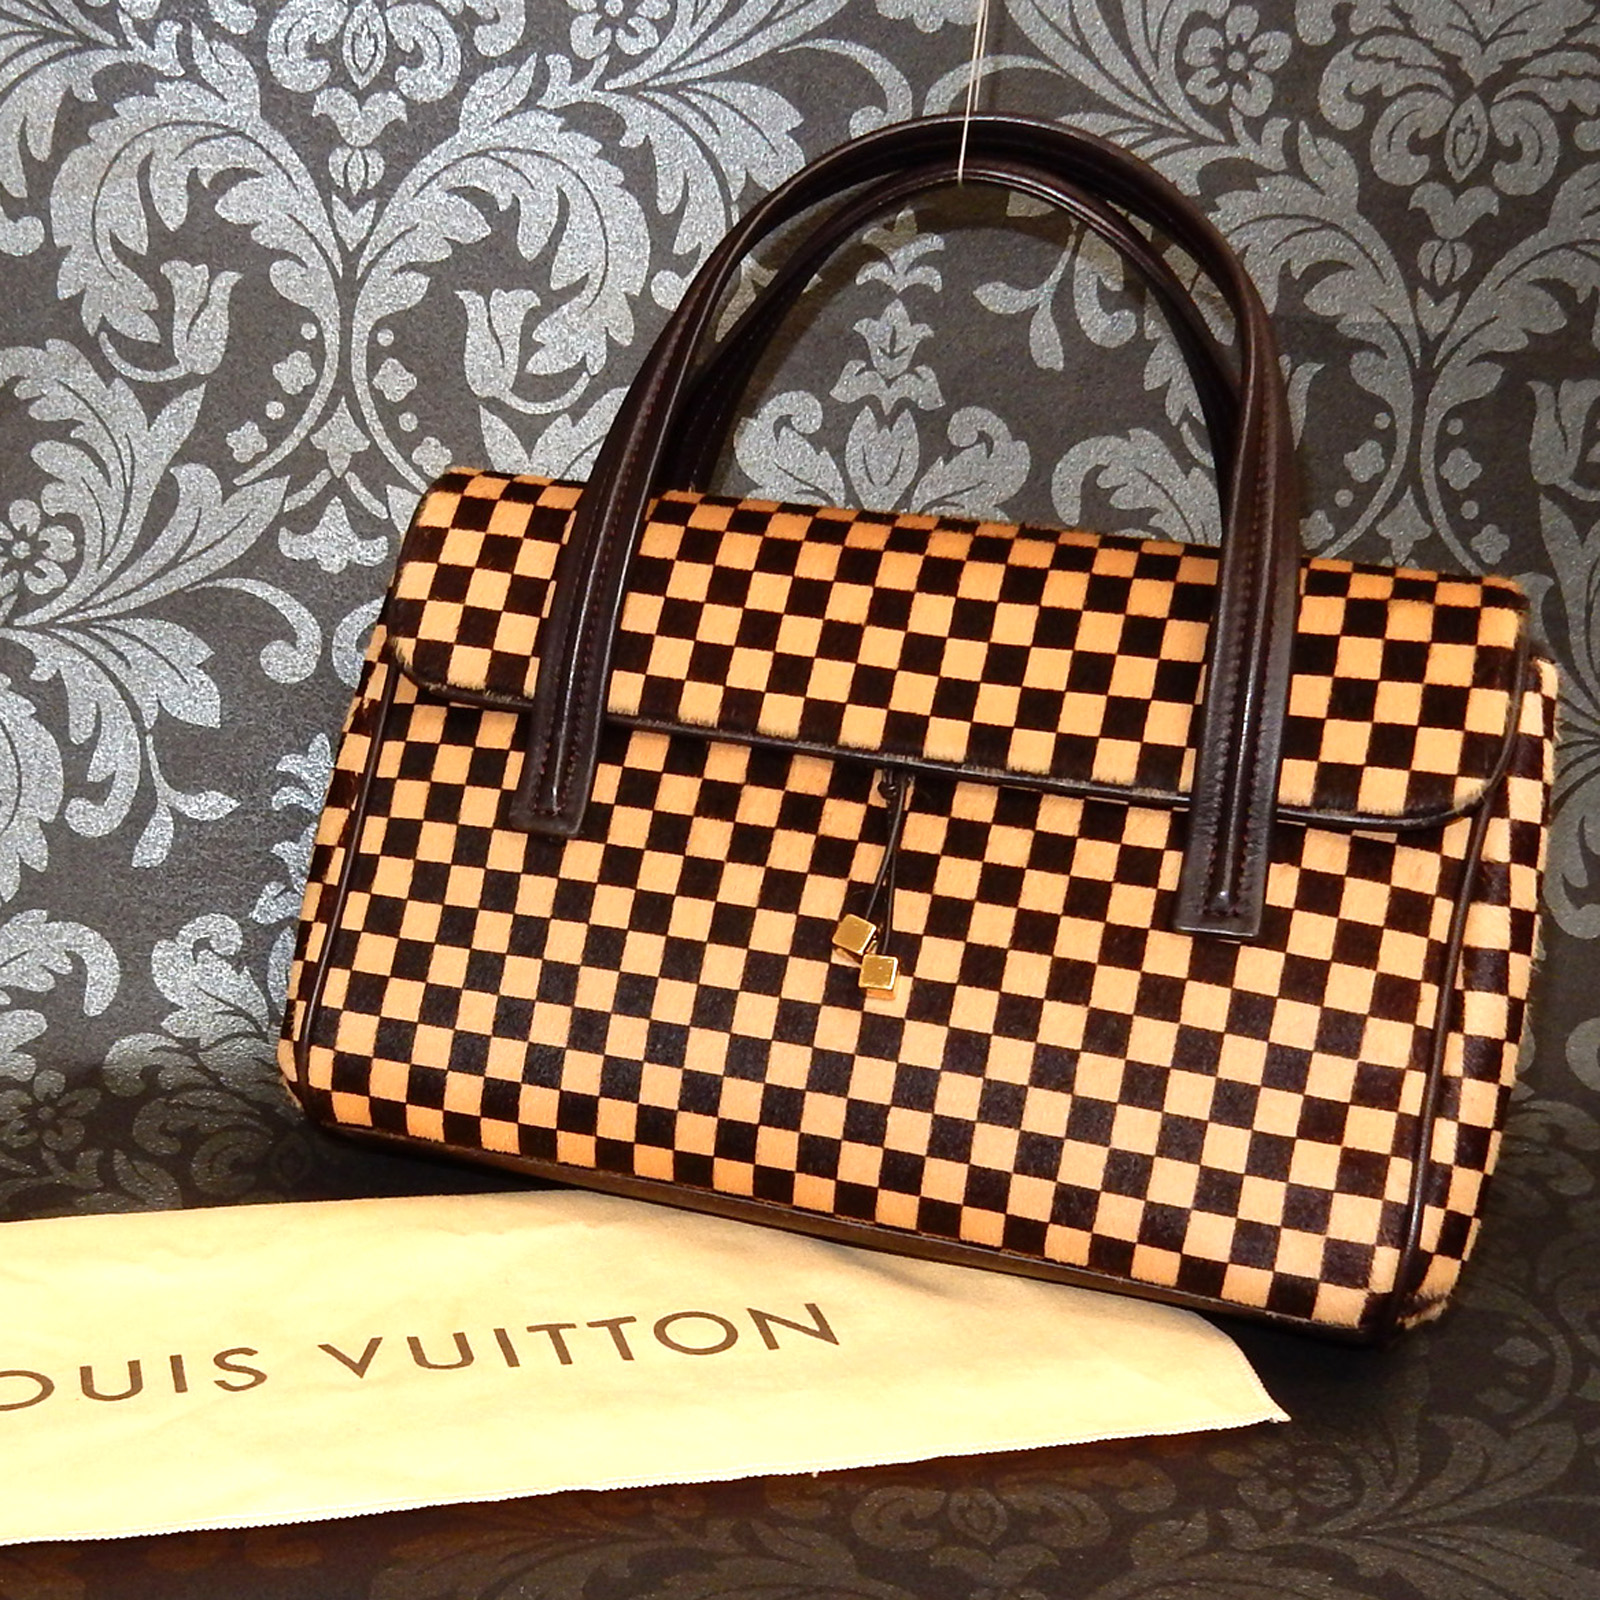 Louis Vuitton Brown Damier Sauvage Lion Handbag QJBCJWFB0B018